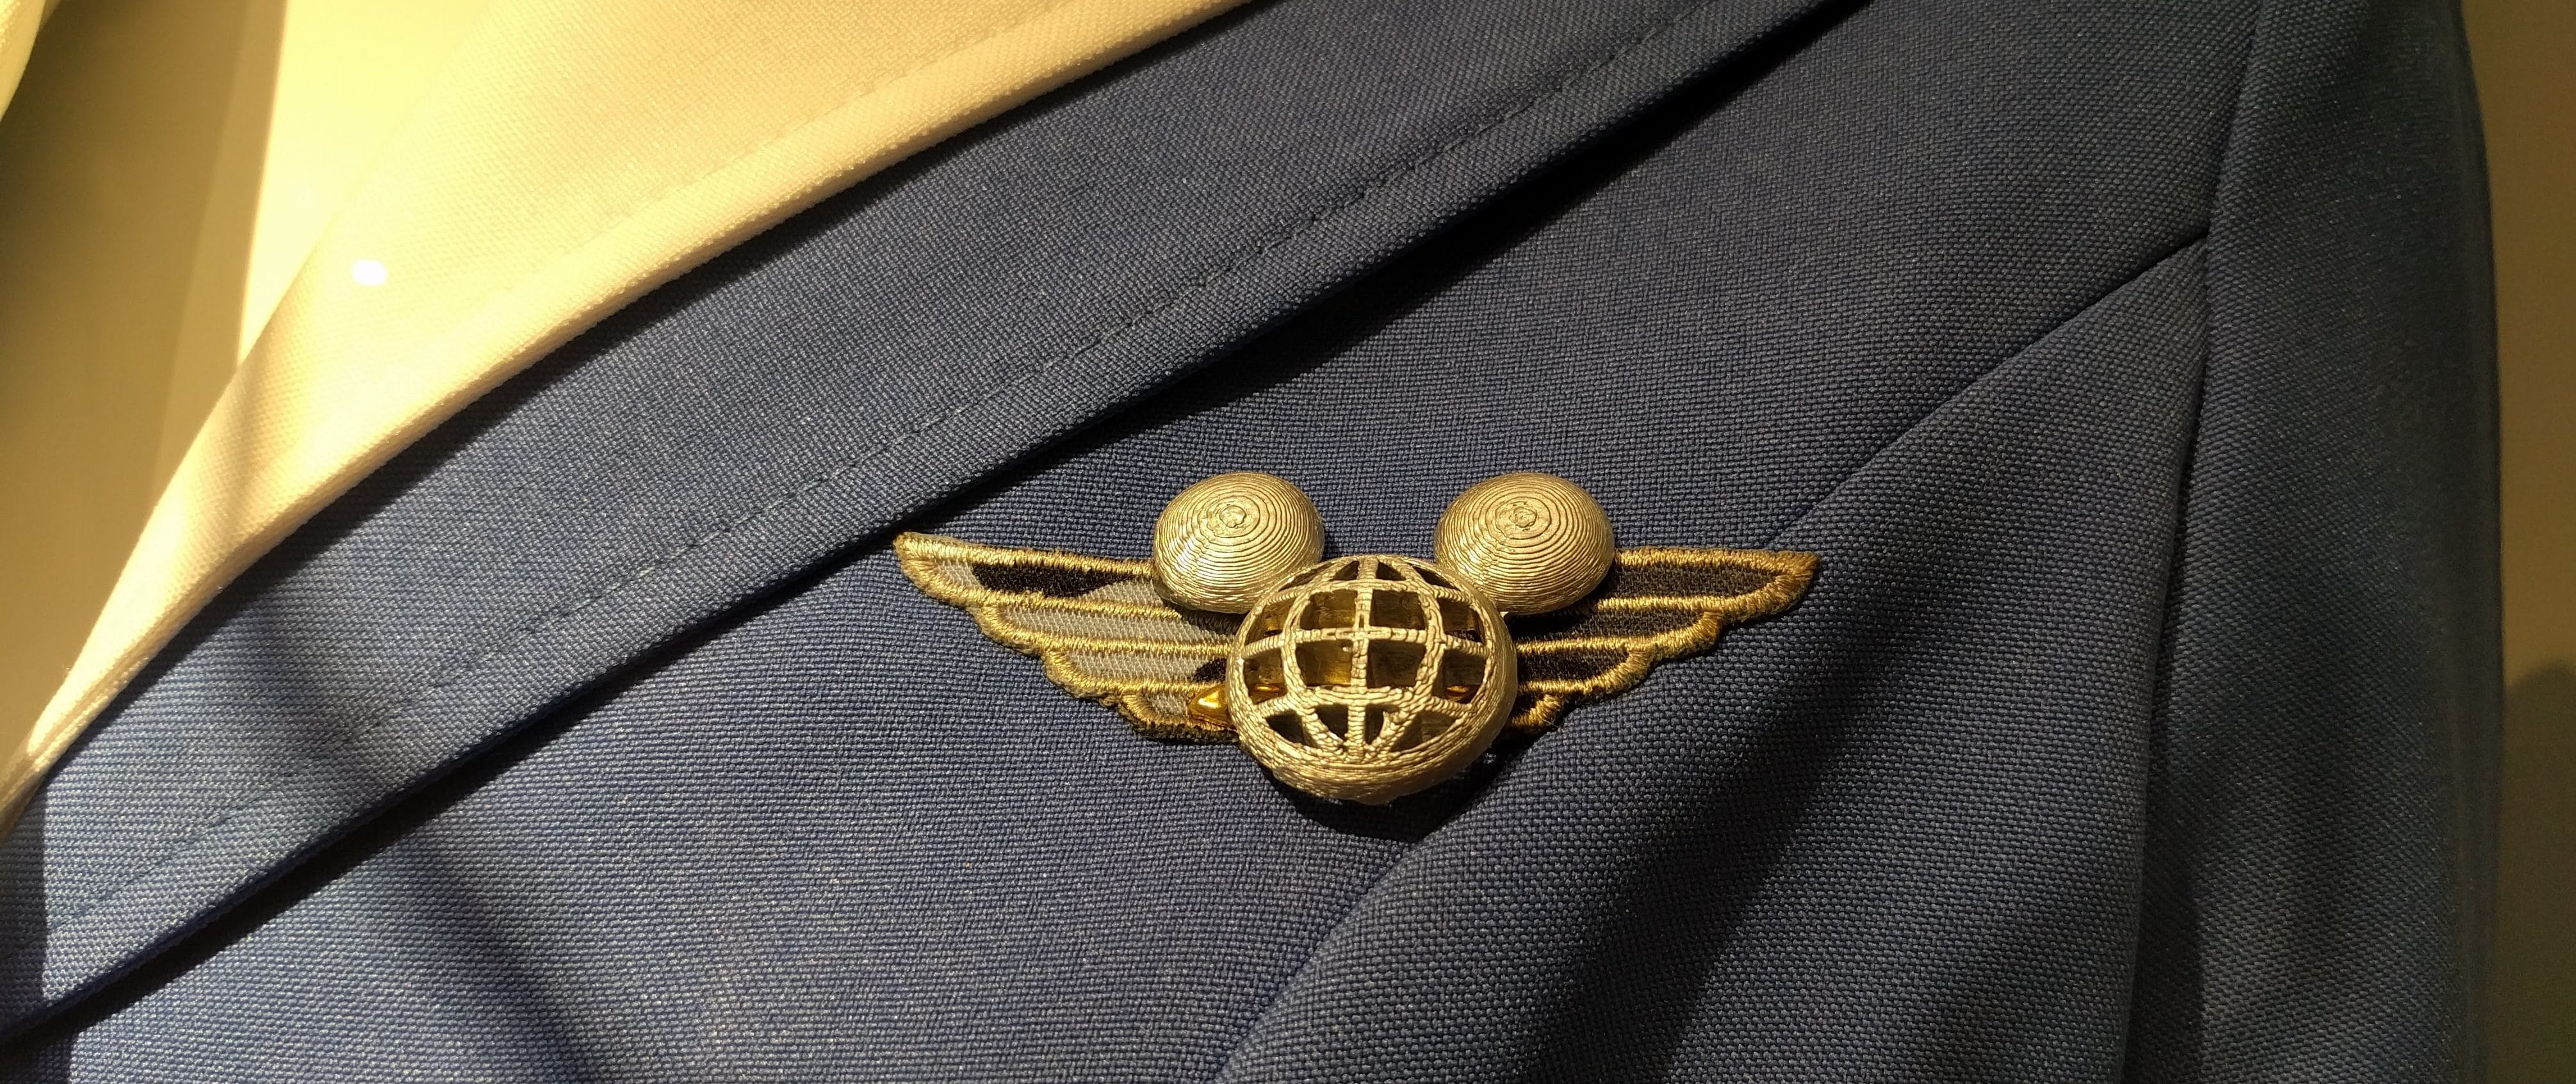 Uniform of Stewardess with Mickey Ears - Disney Round the World